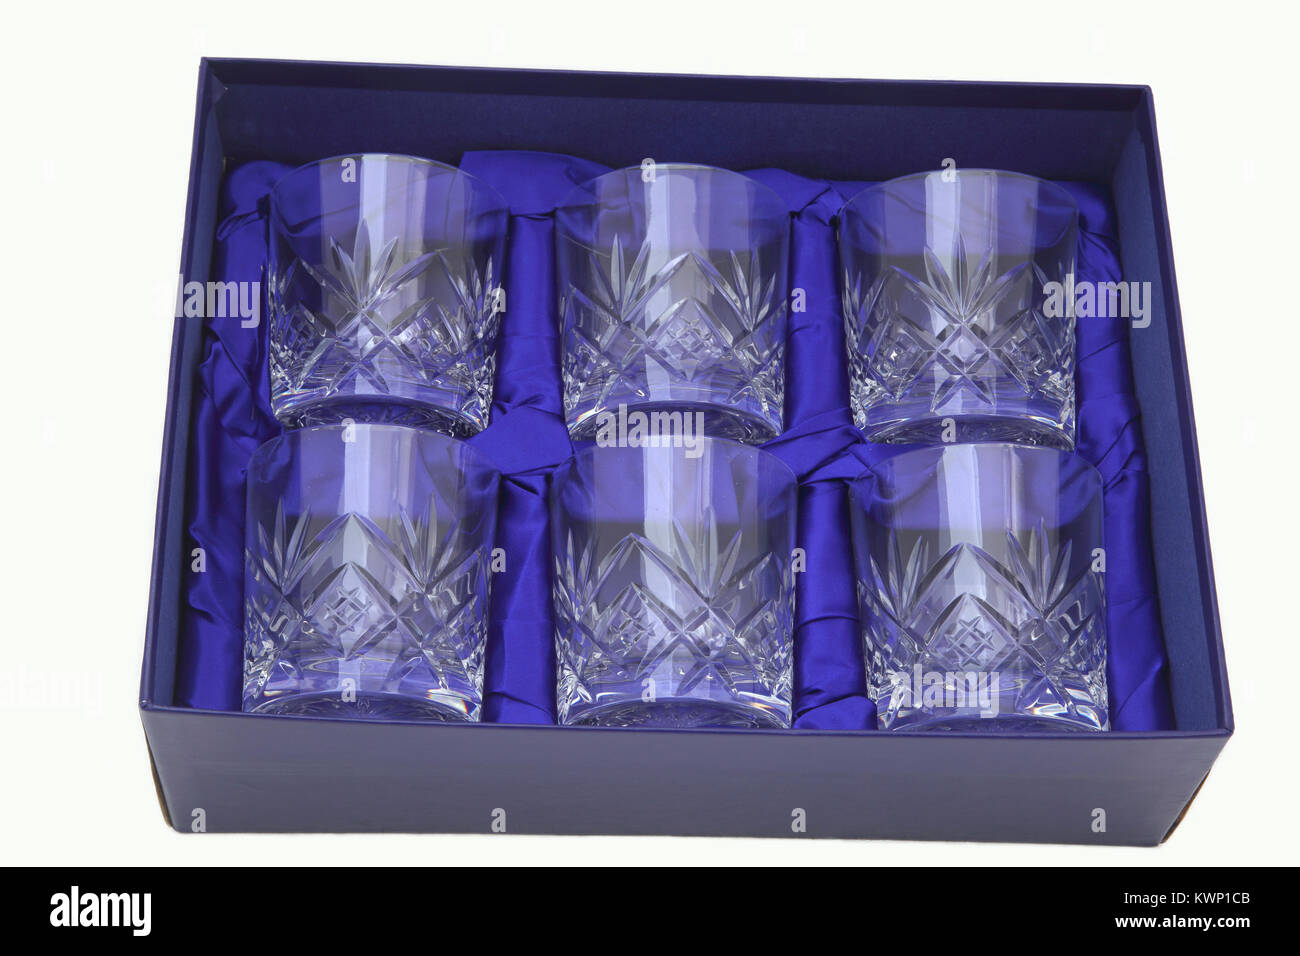 https://c8.alamy.com/compes/kwp1cb/conjunto-de-seis-royal-doulton-vasos-de-cristal-en-una-caja-kwp1cb.jpg